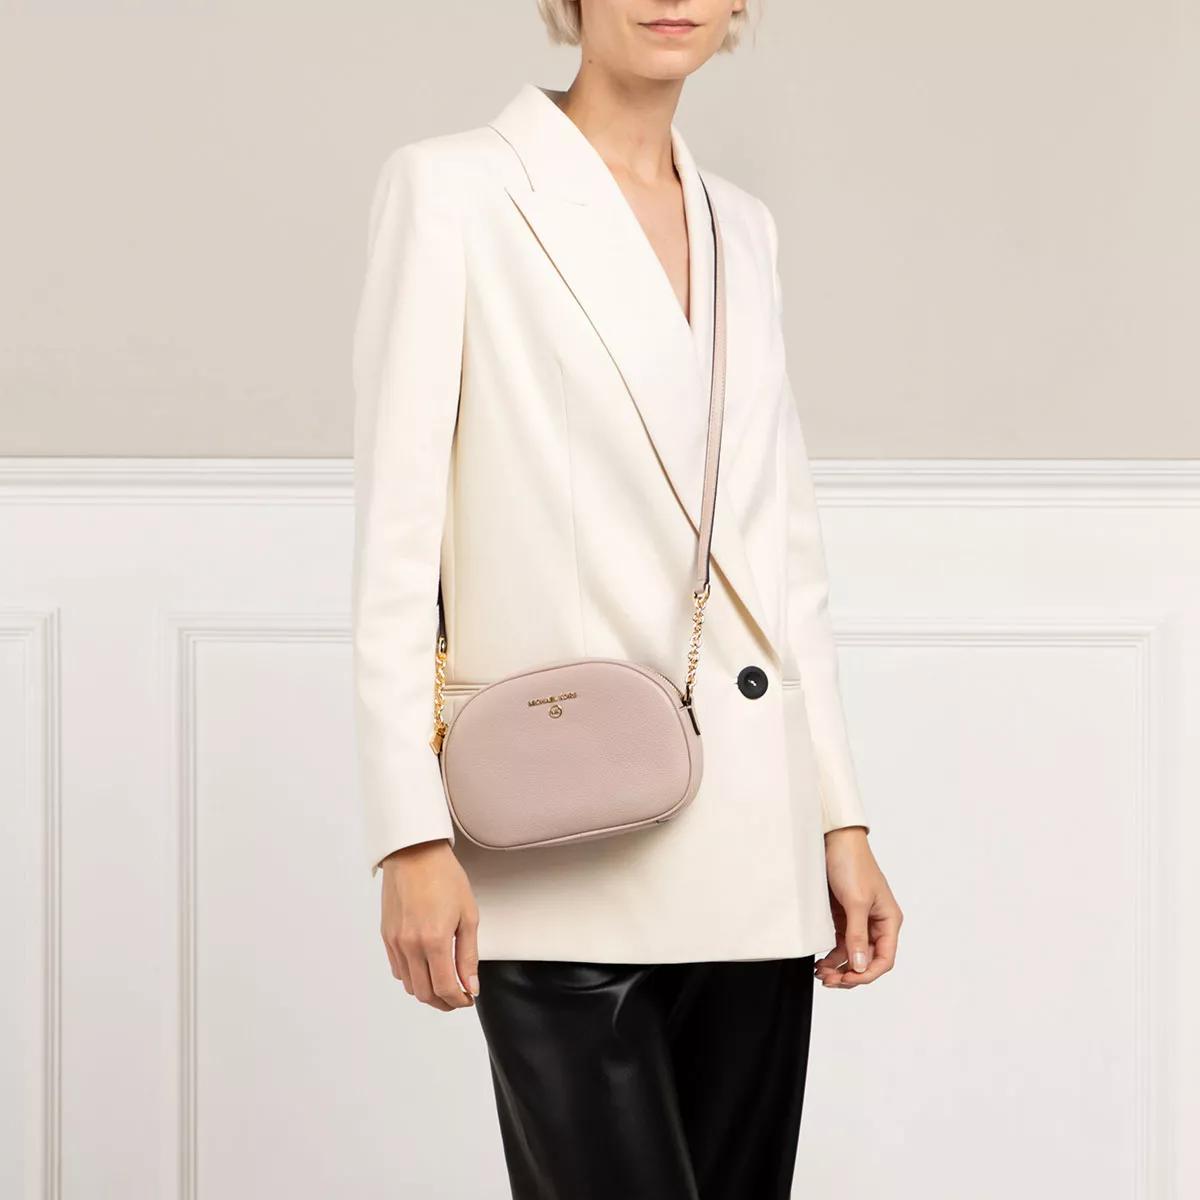 Michael Kors Mercer Medium Pebbled Leather Crossbody Bag- Soft Pink